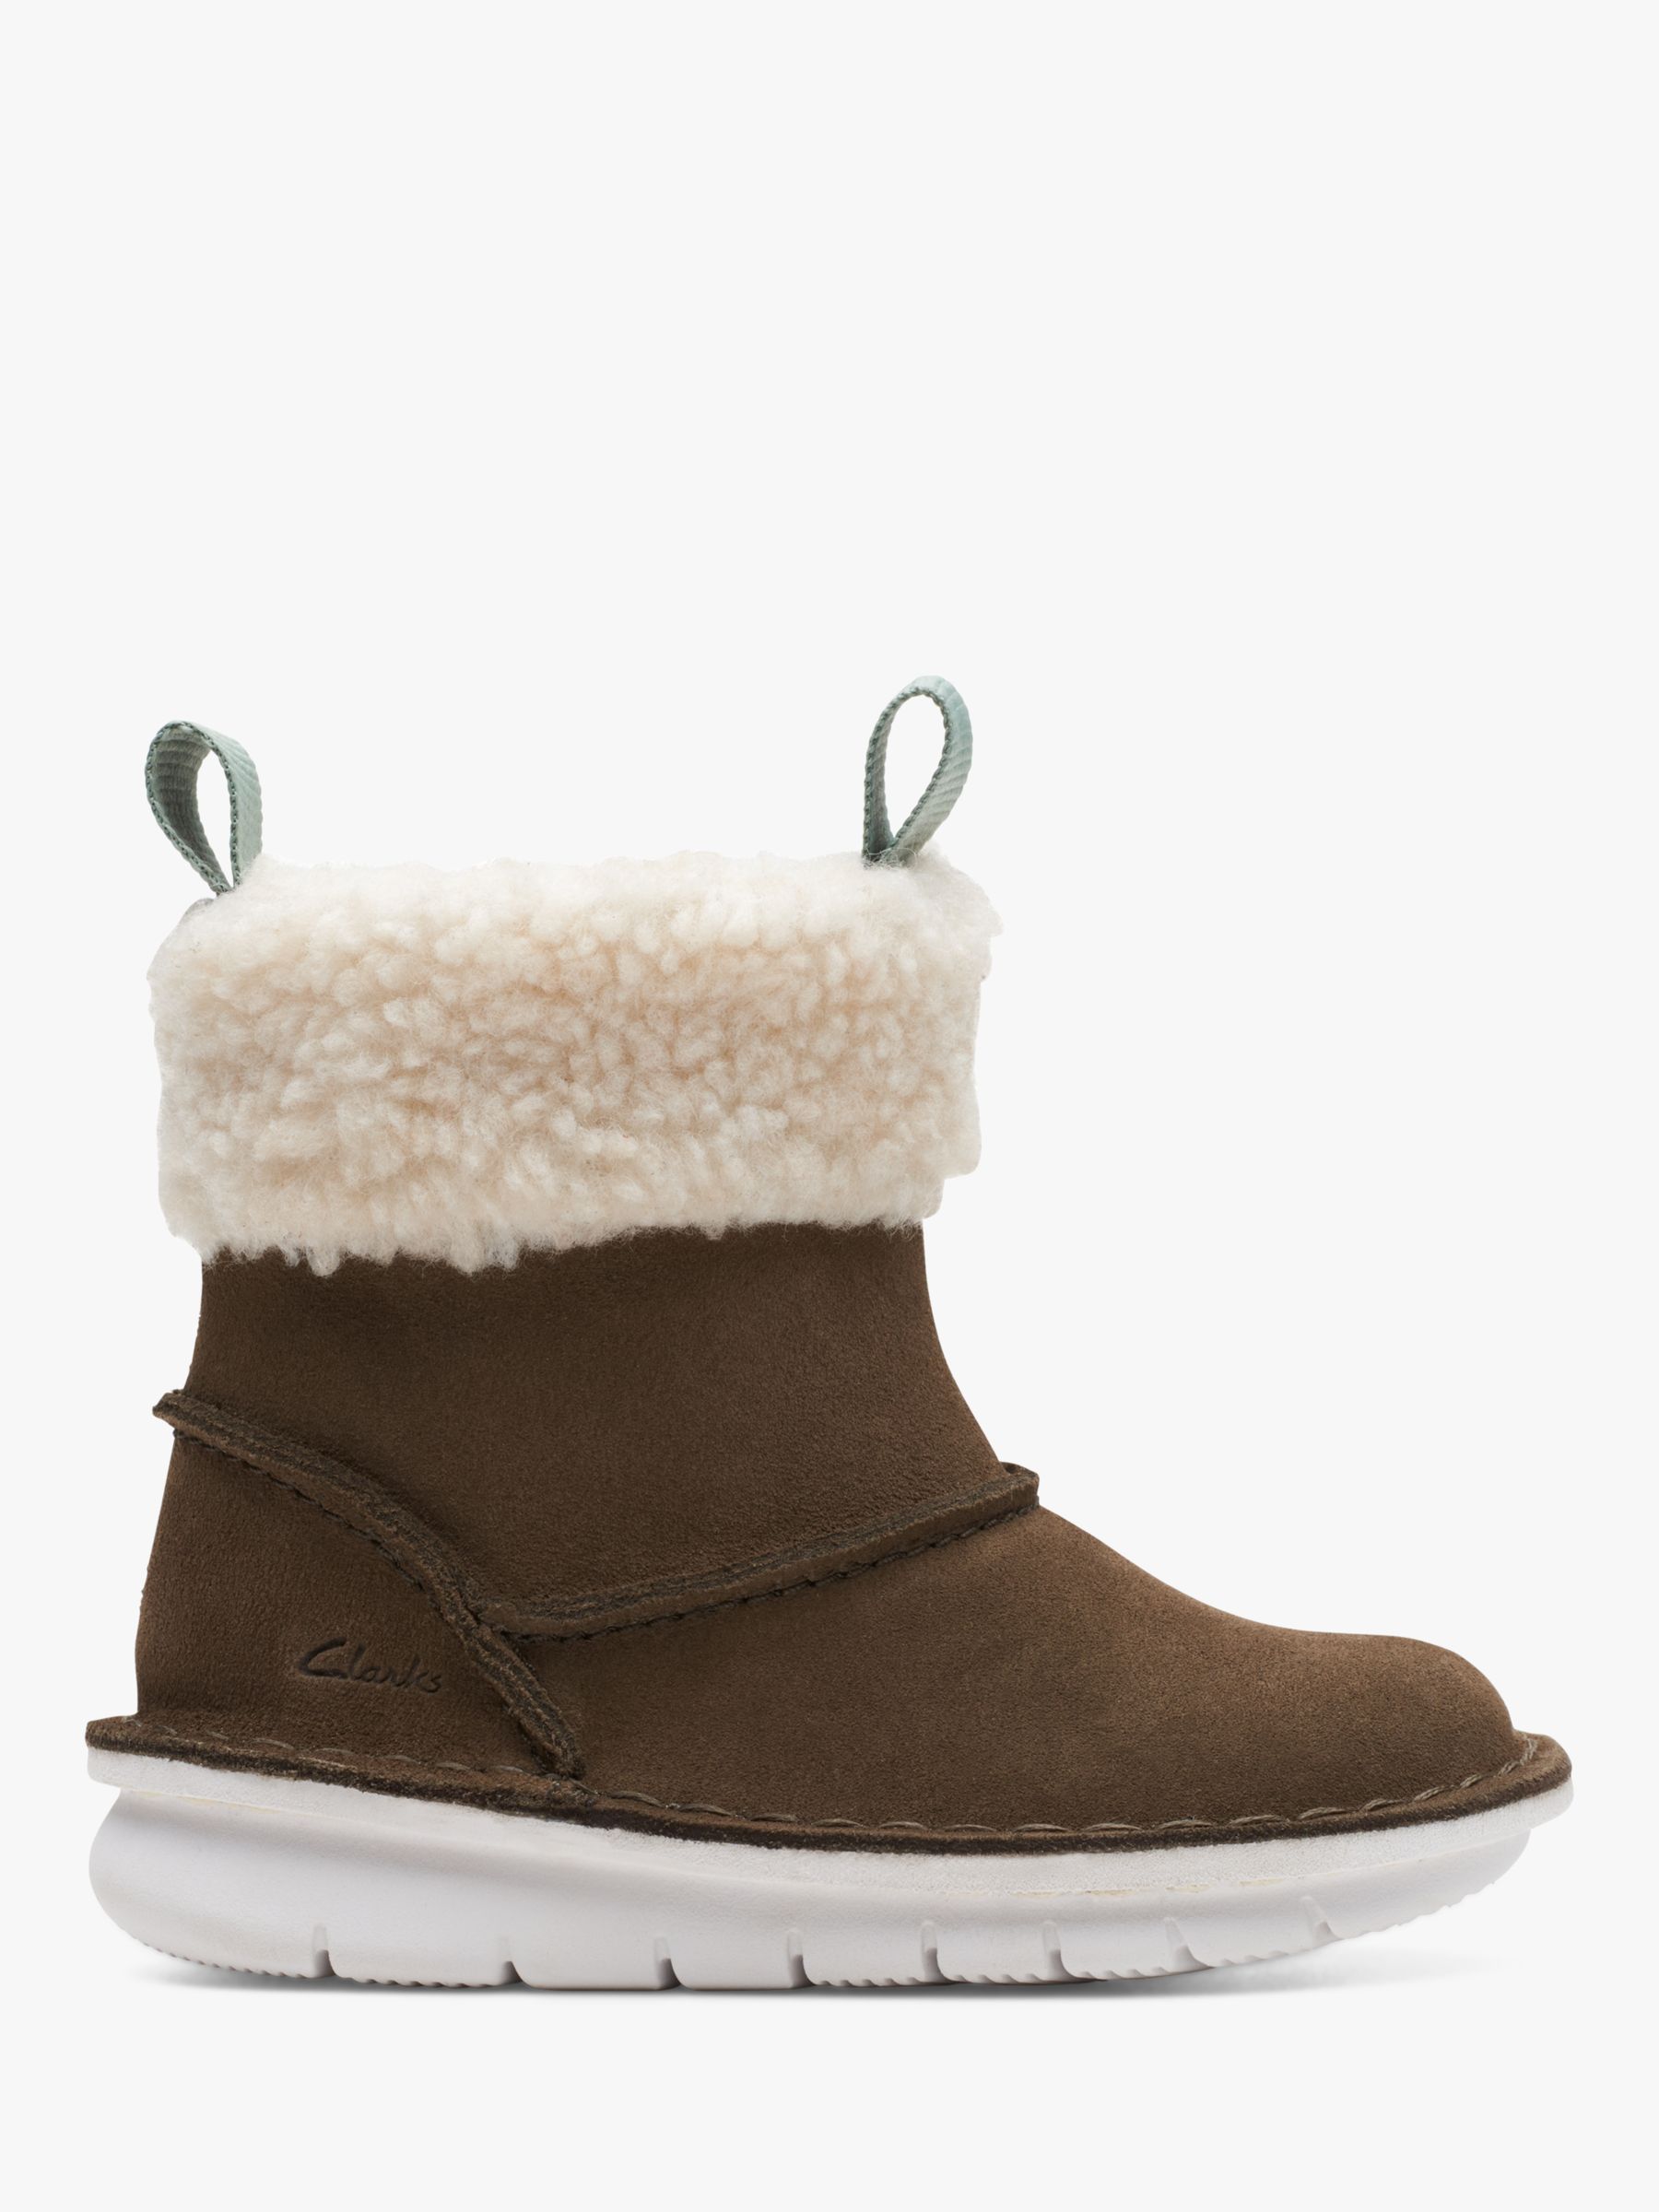 Clarks Kids' Banbrook Warm Lined Boots, Walnut